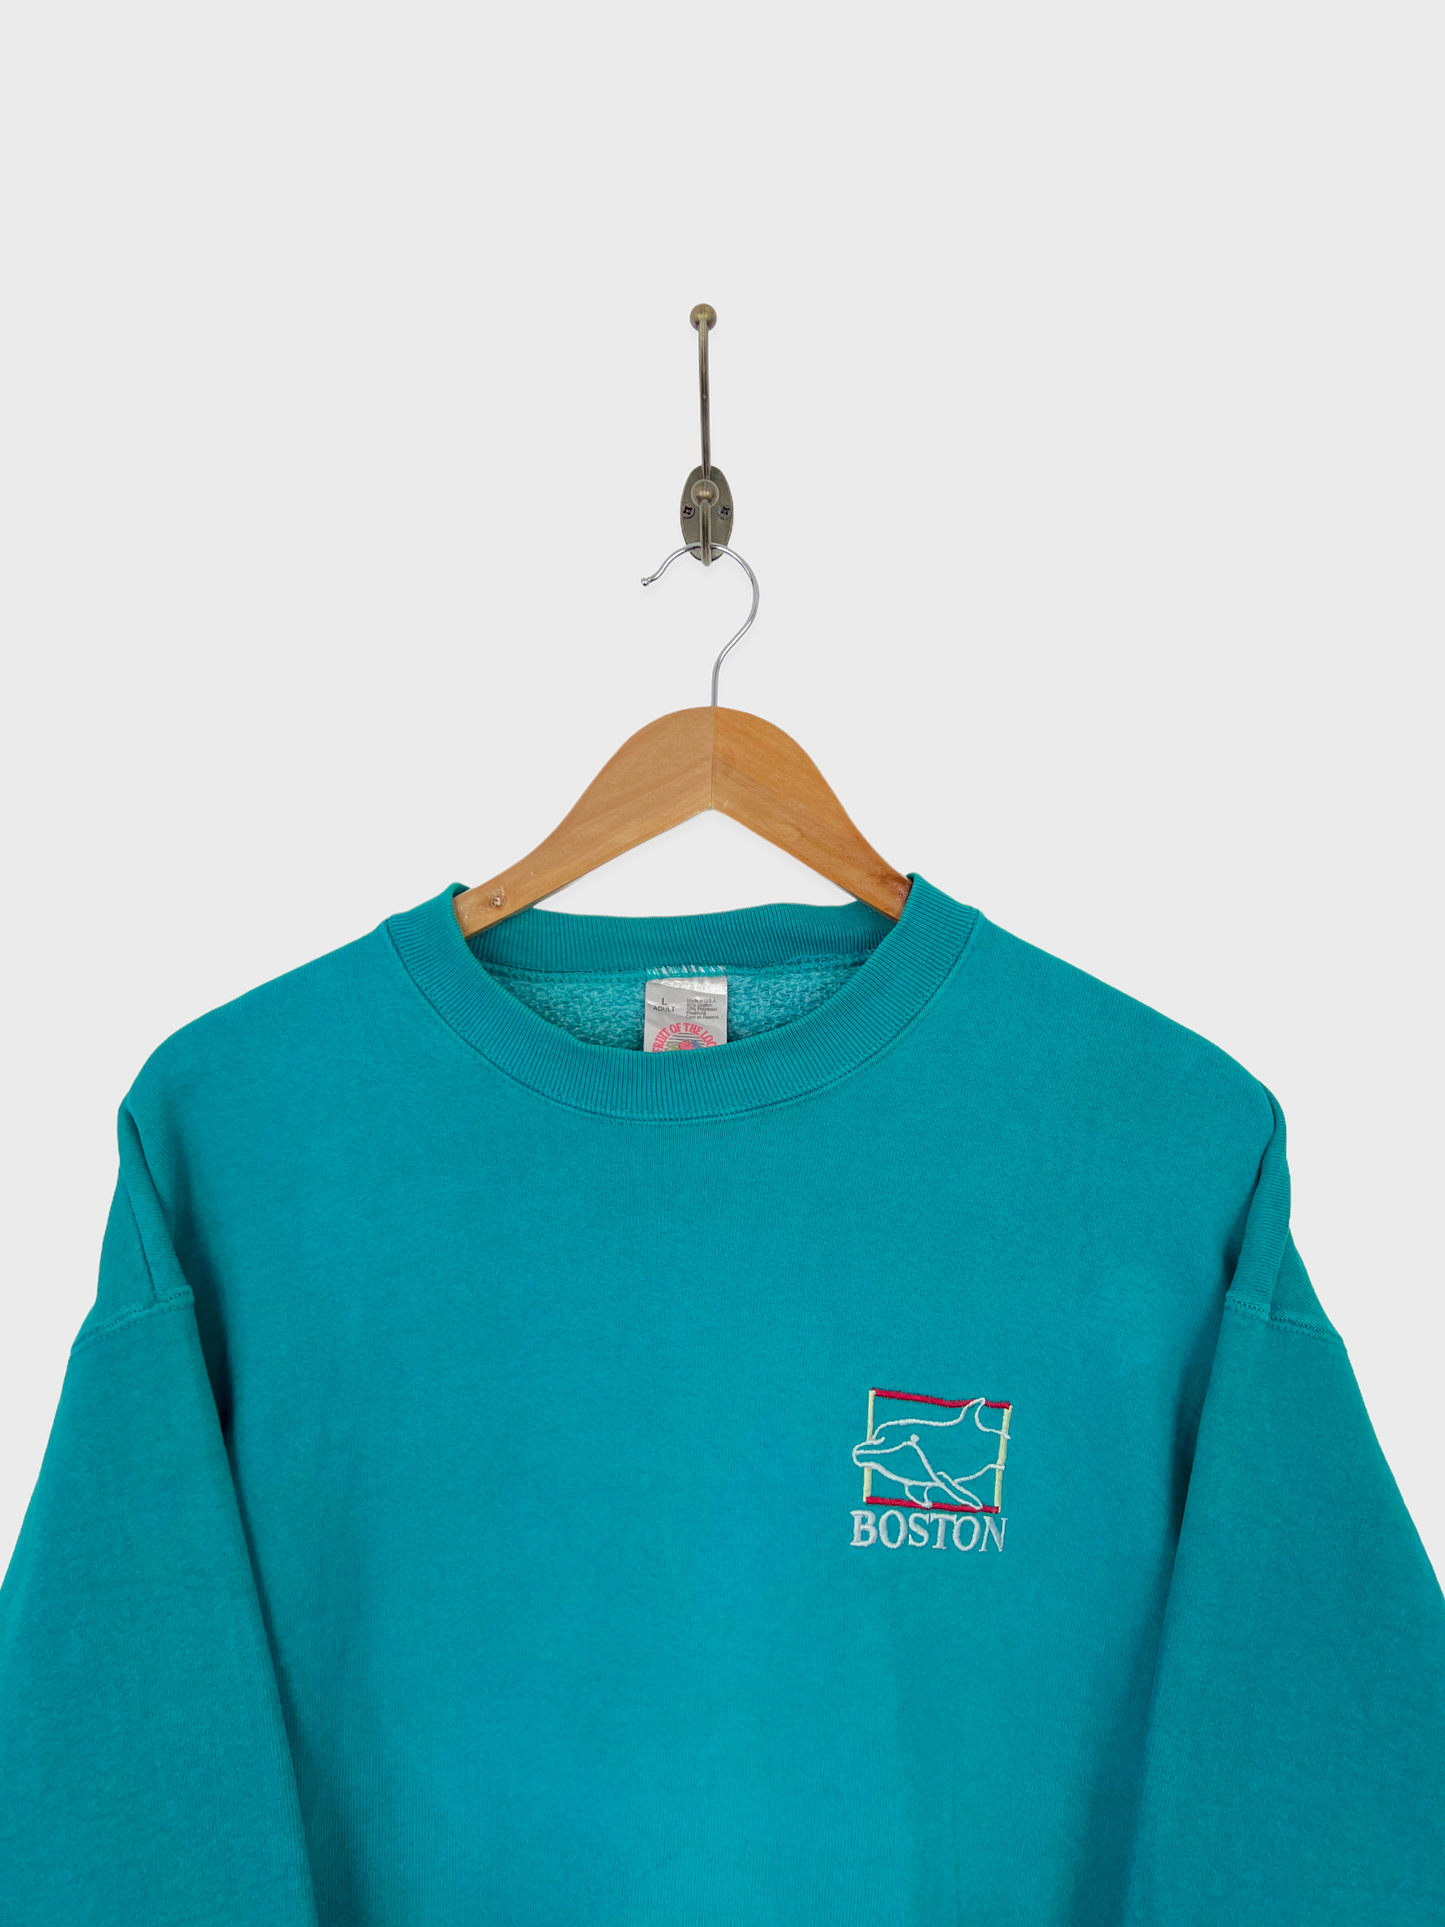 90's Boston USA Made Embroidered Vintage Sweatshirt Size M